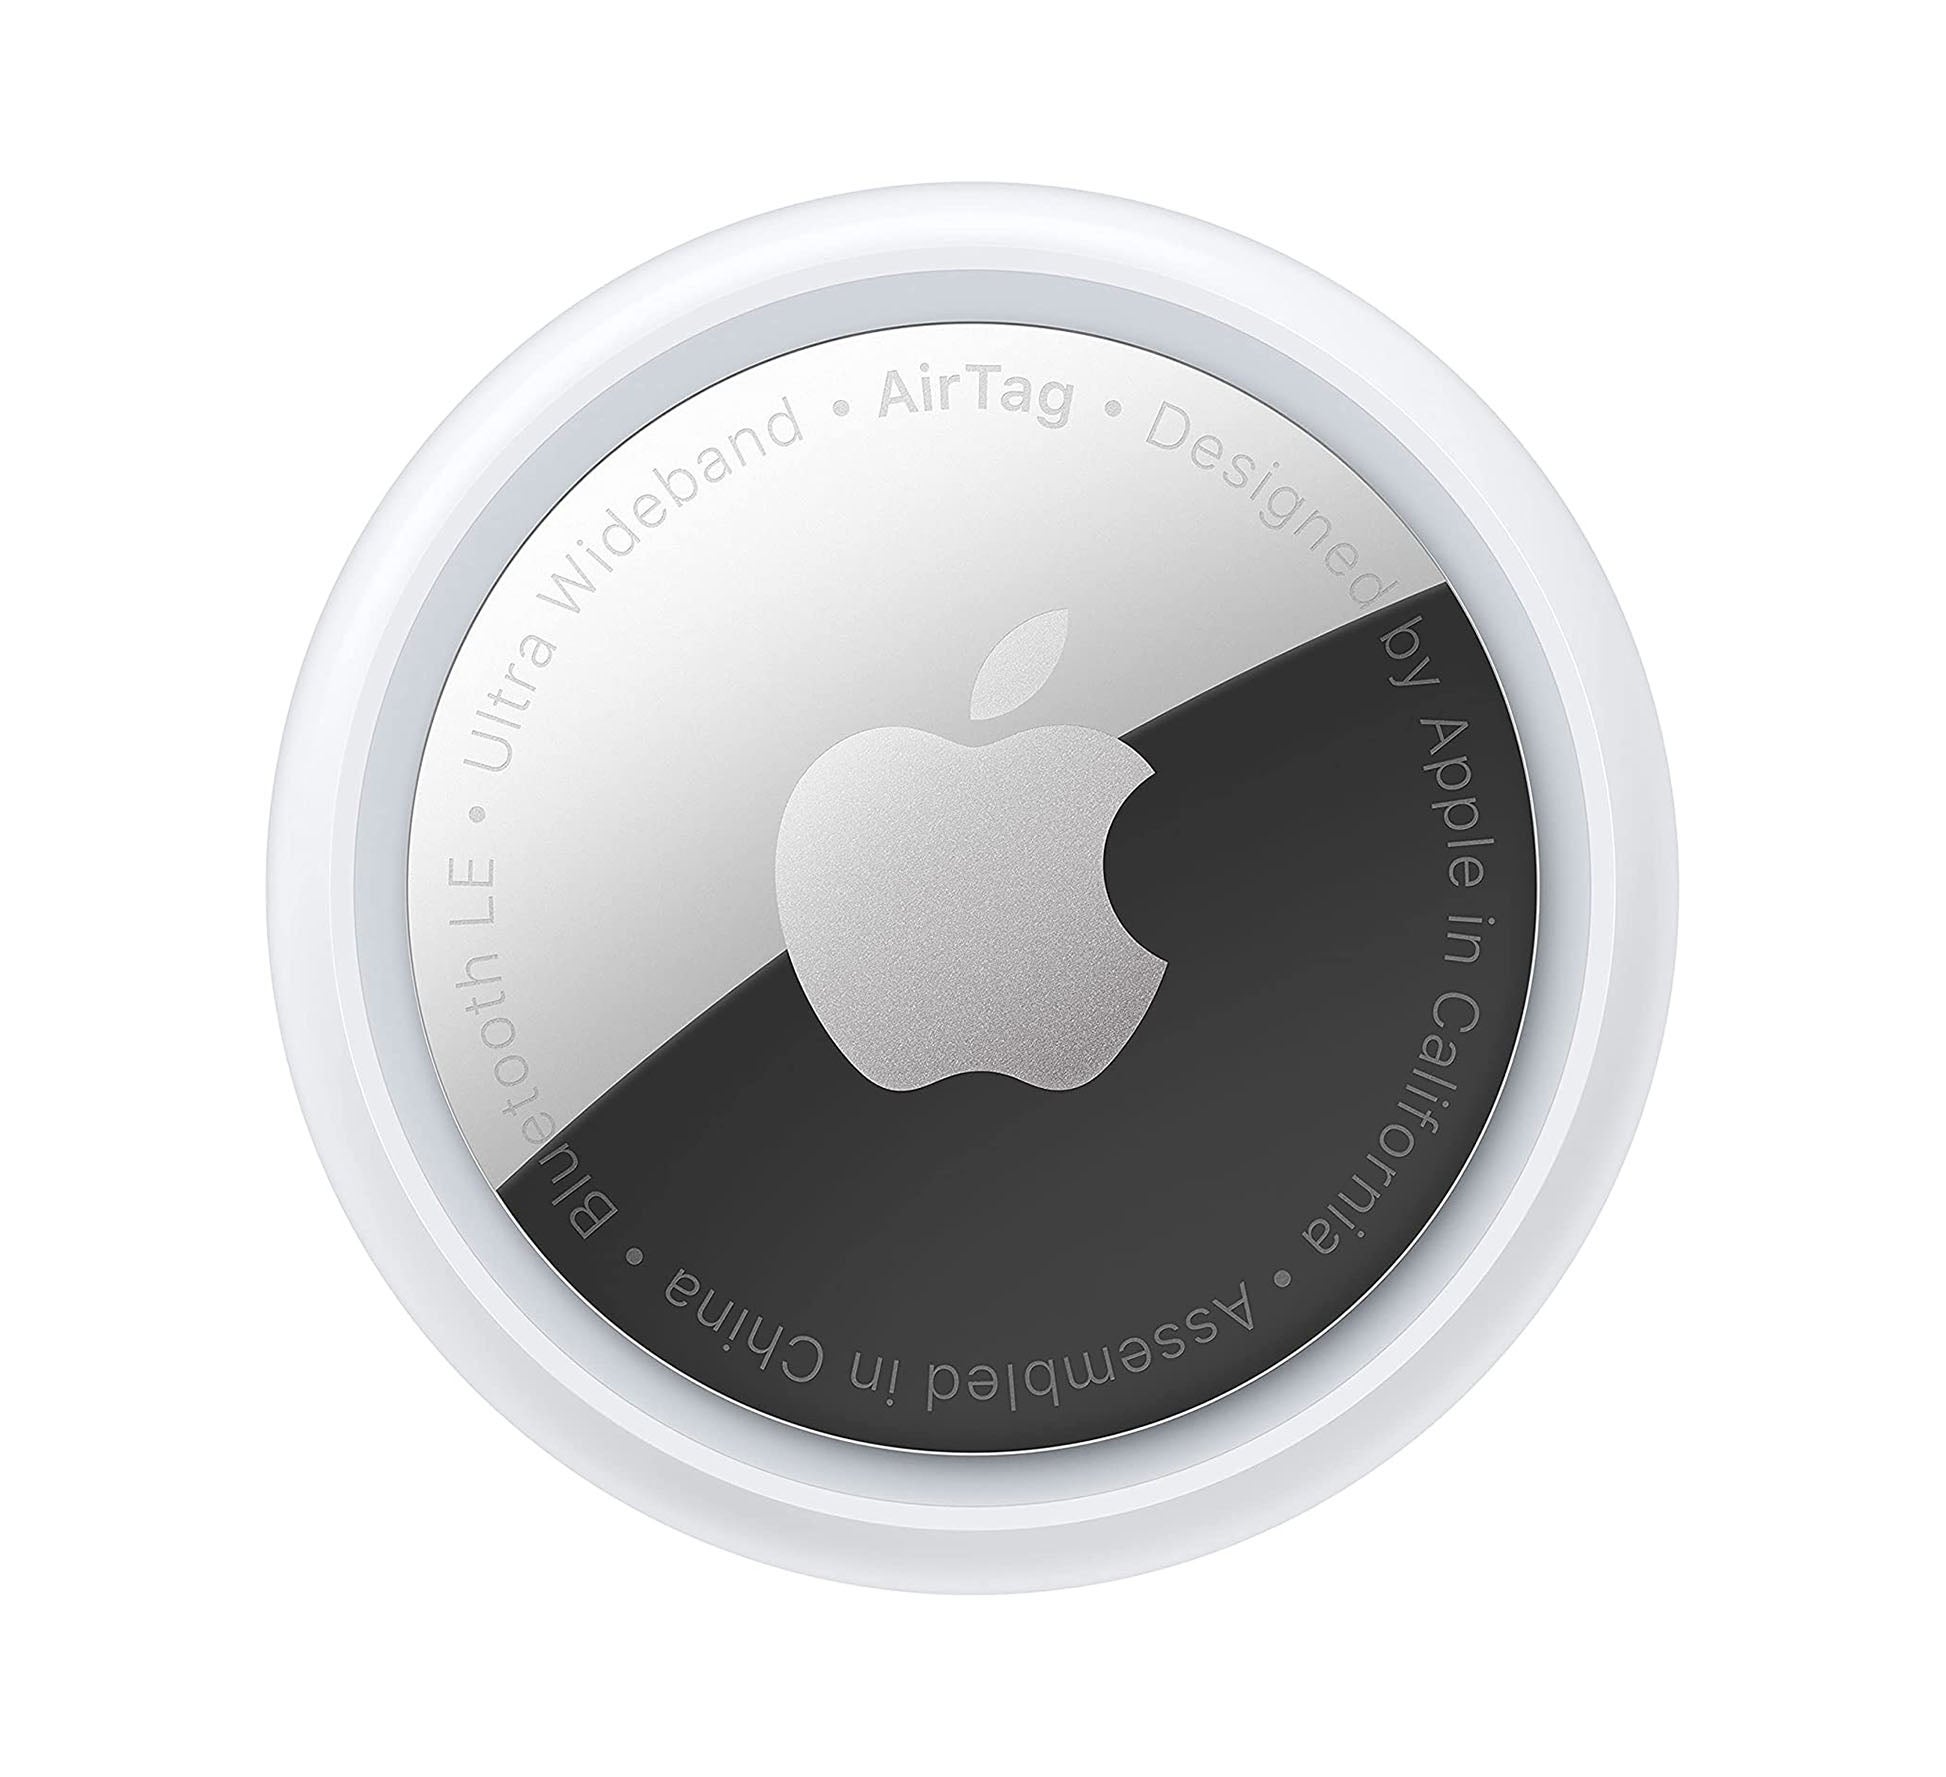 Apple airtag indybest.jpg